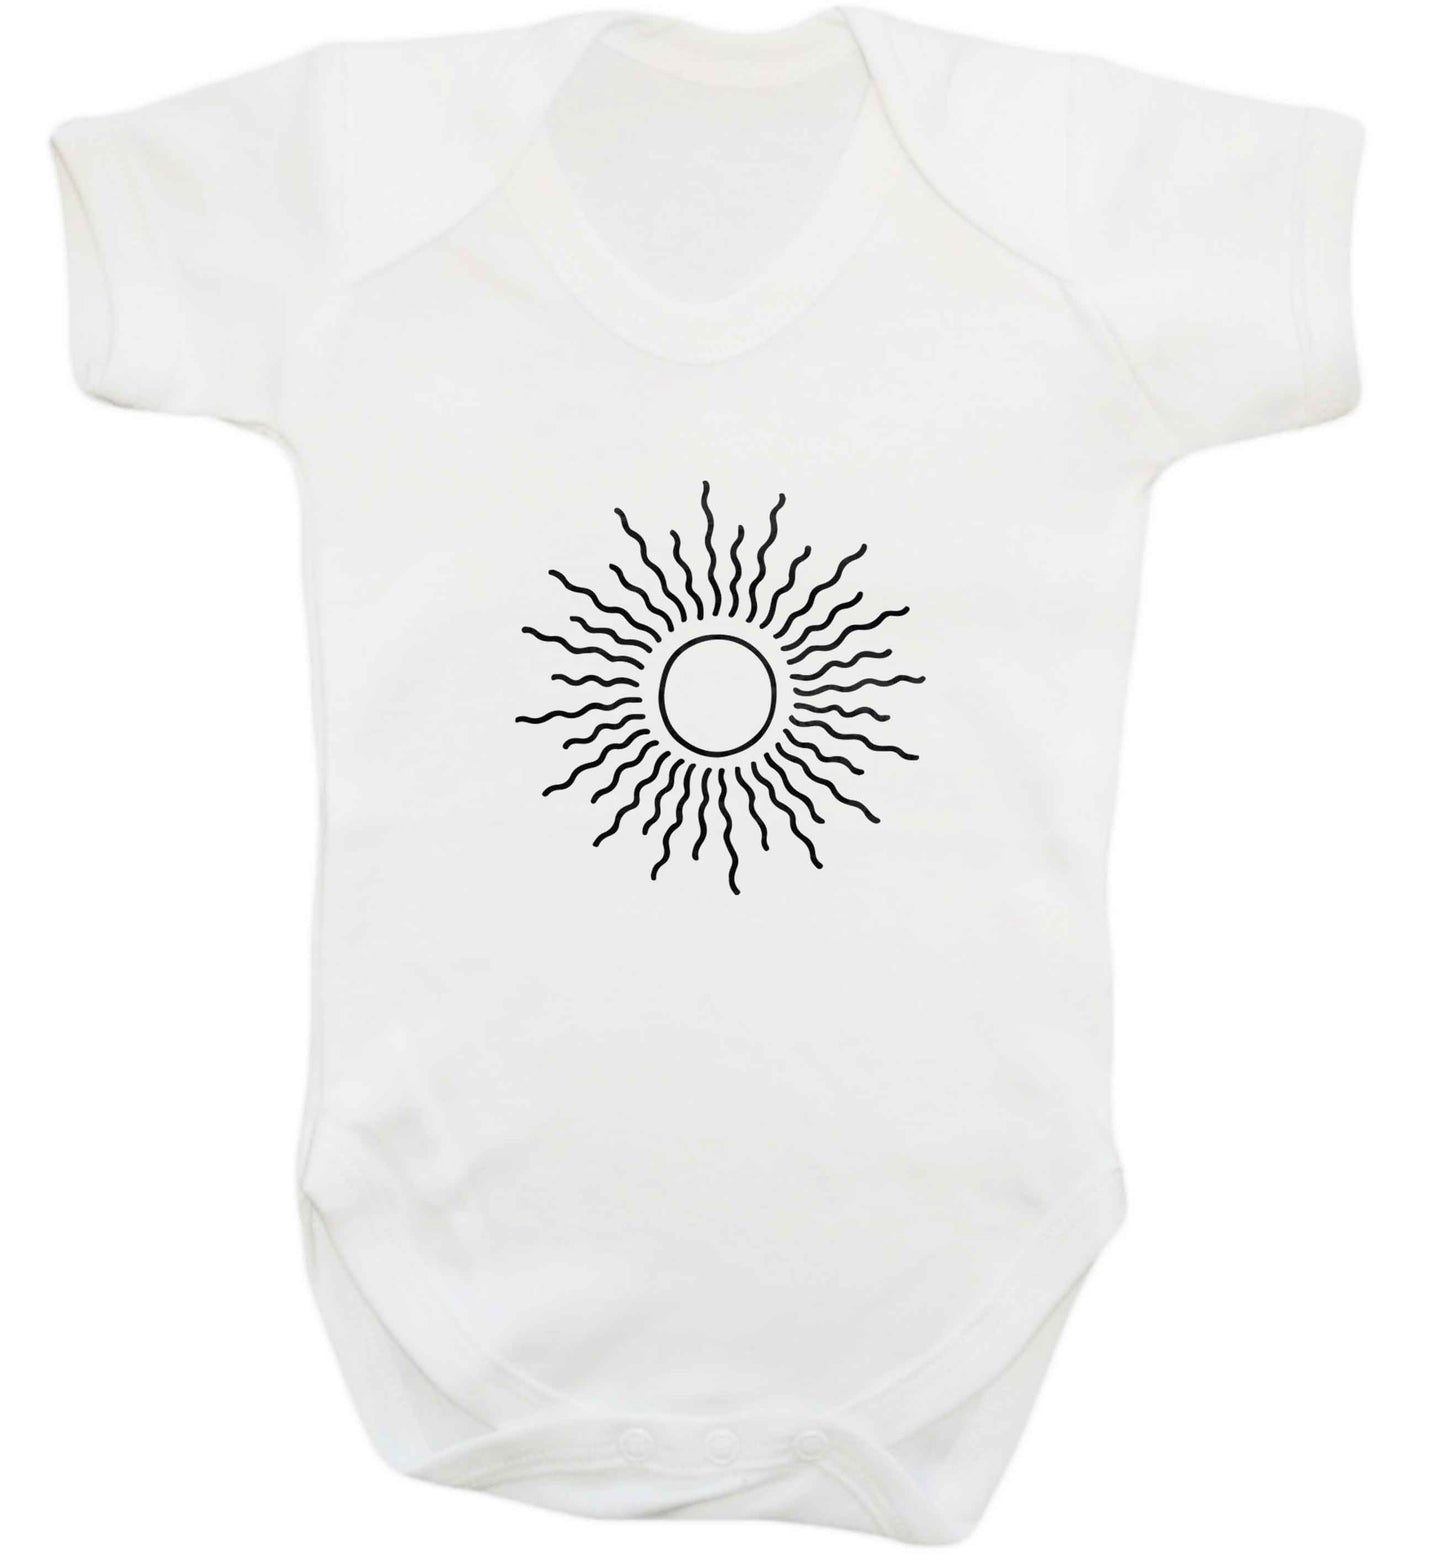 Sun illustration baby vest white 18-24 months